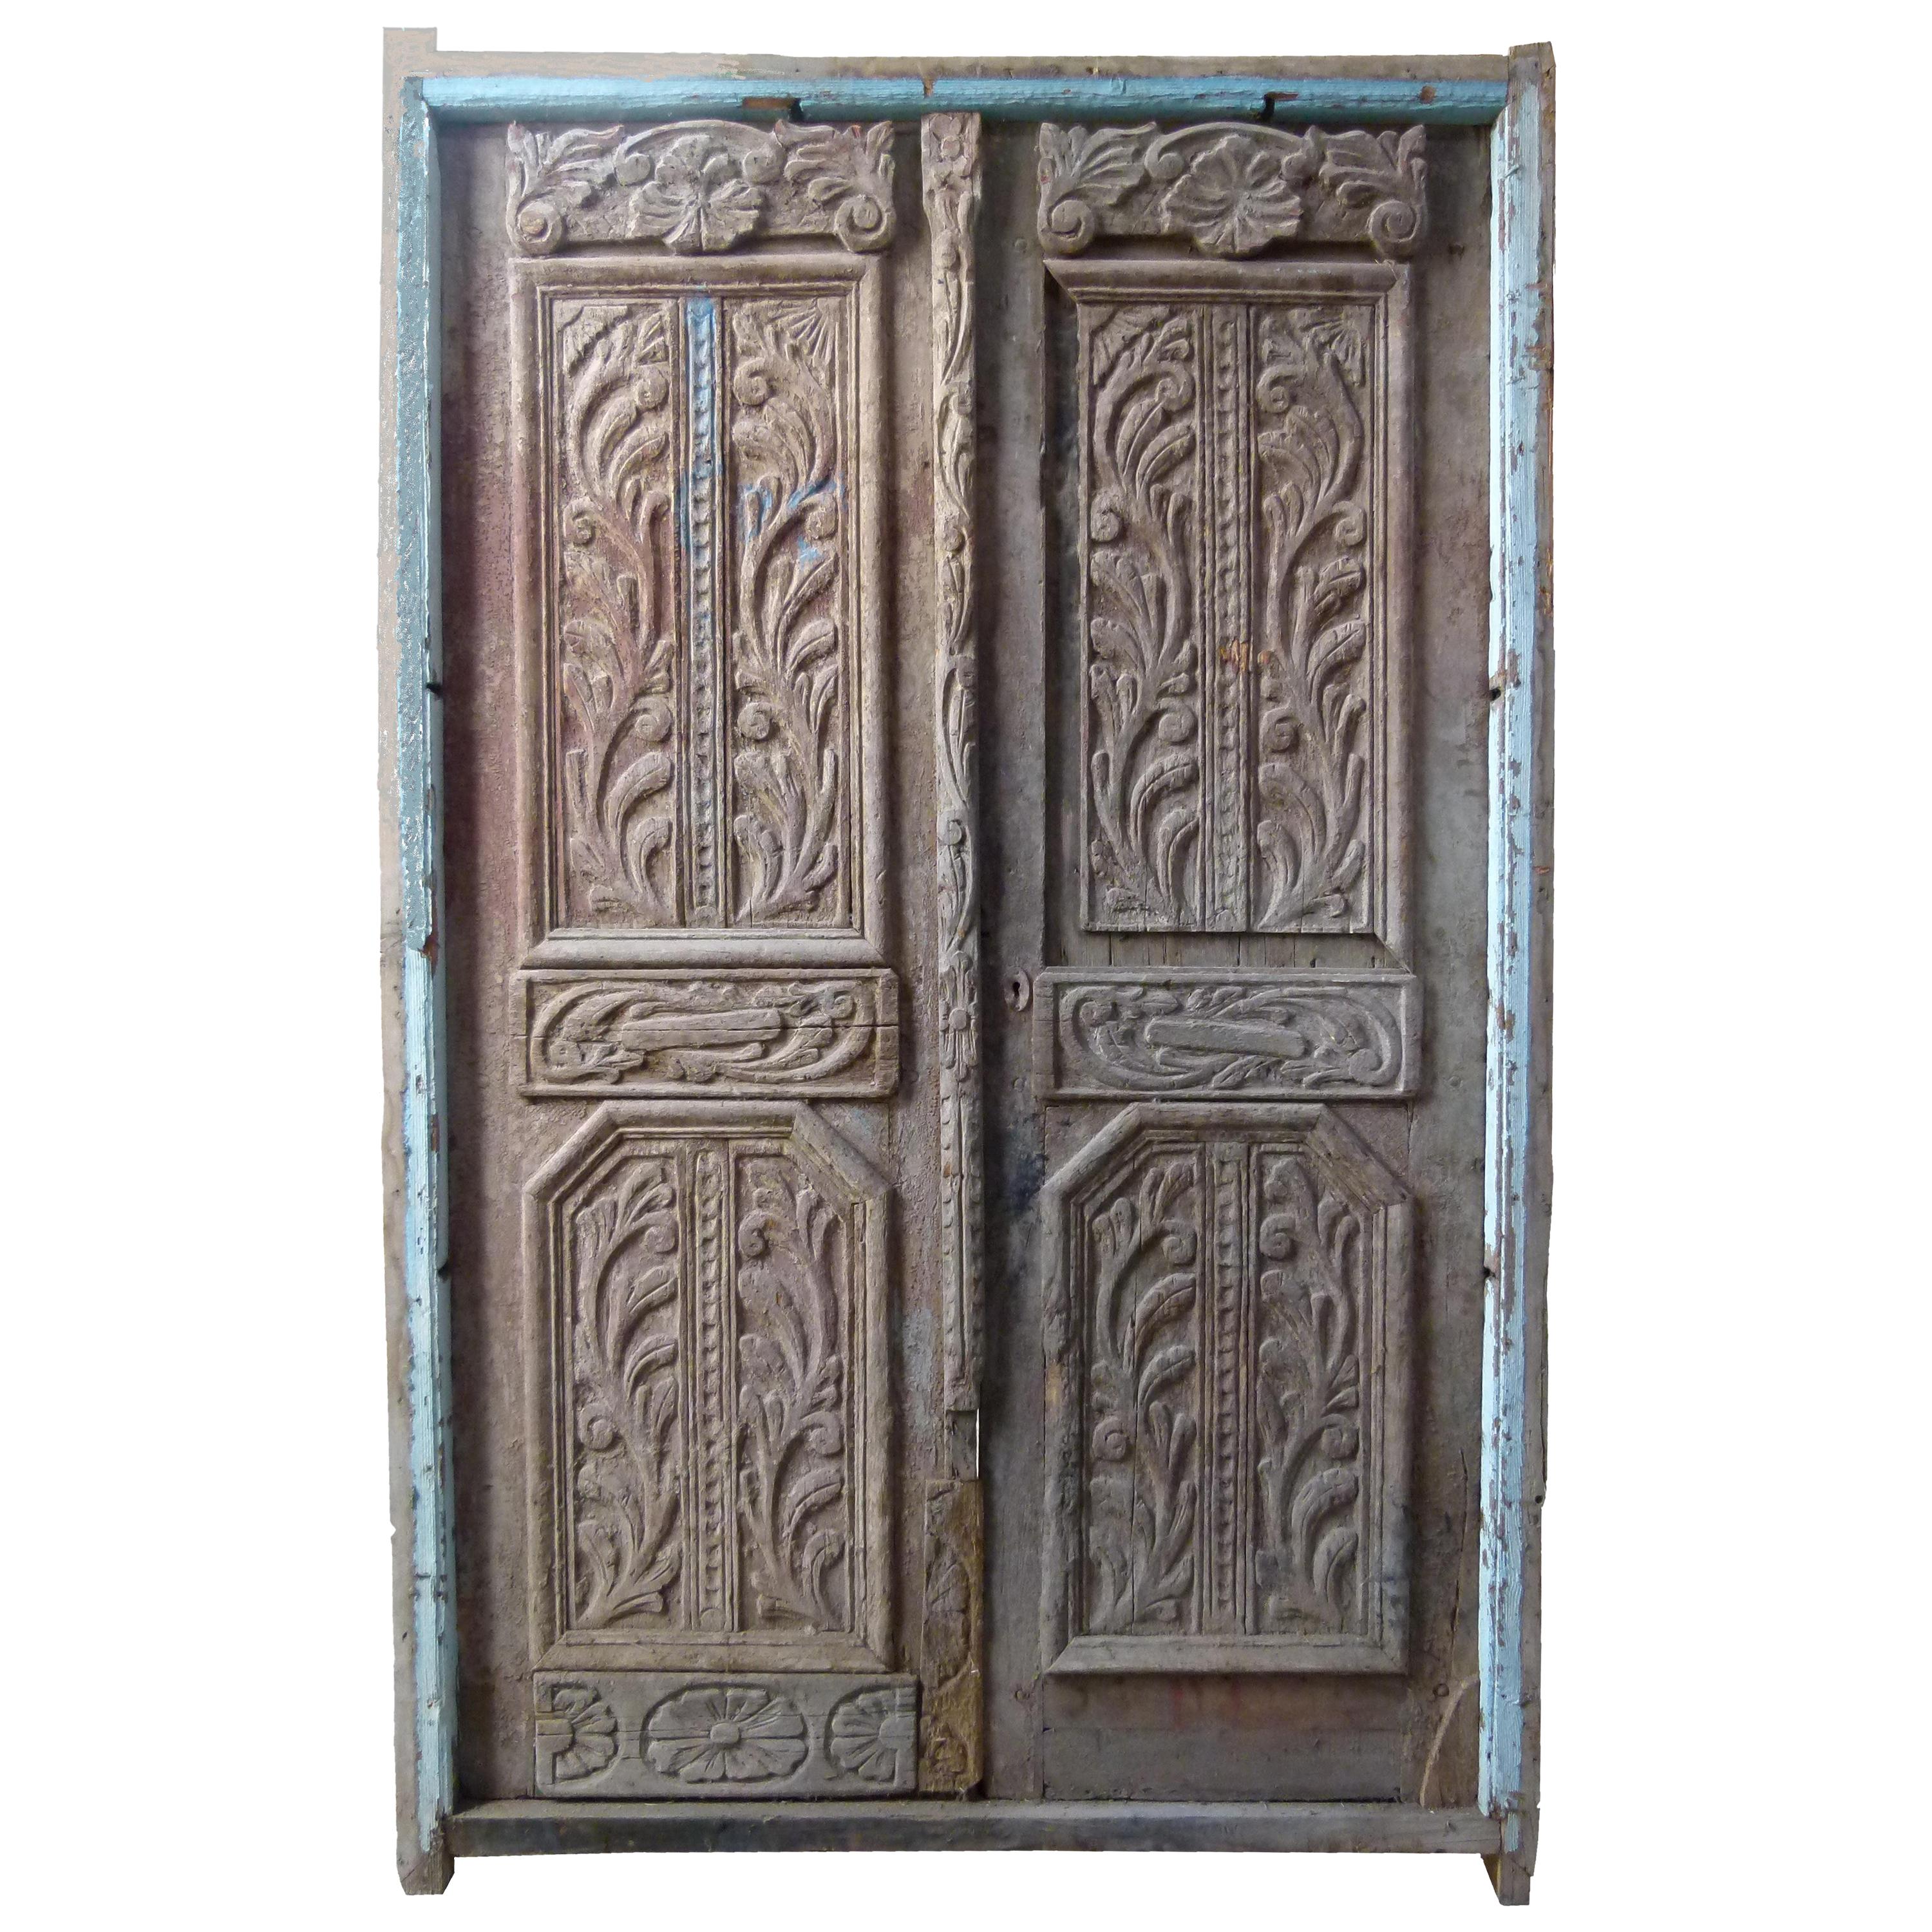 19th Century Wooden Double Front Door in Art Nouveau Style, Spain